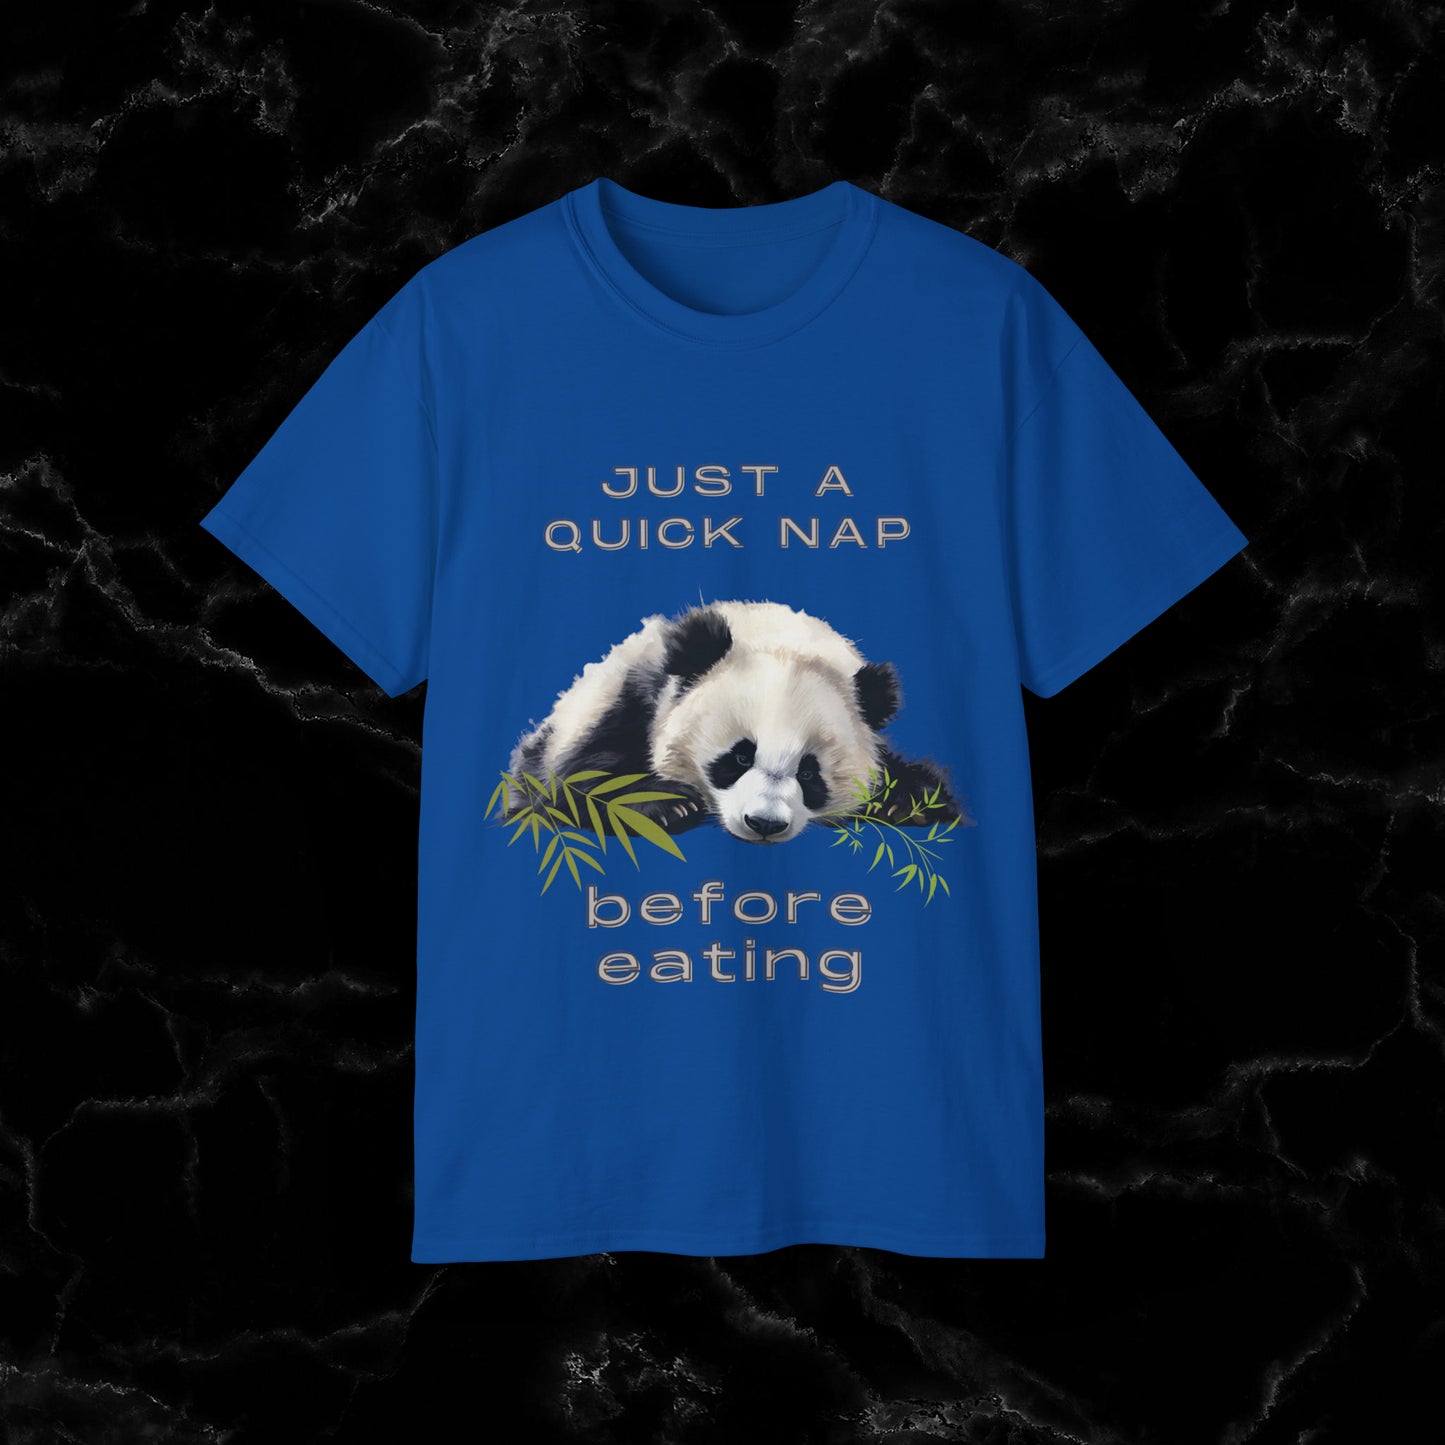 Nap Time Panda Unisex Funny Tee - Hilarious Panda Nap Design - Just a Quick Nap Before Eating T-Shirt Royal L 